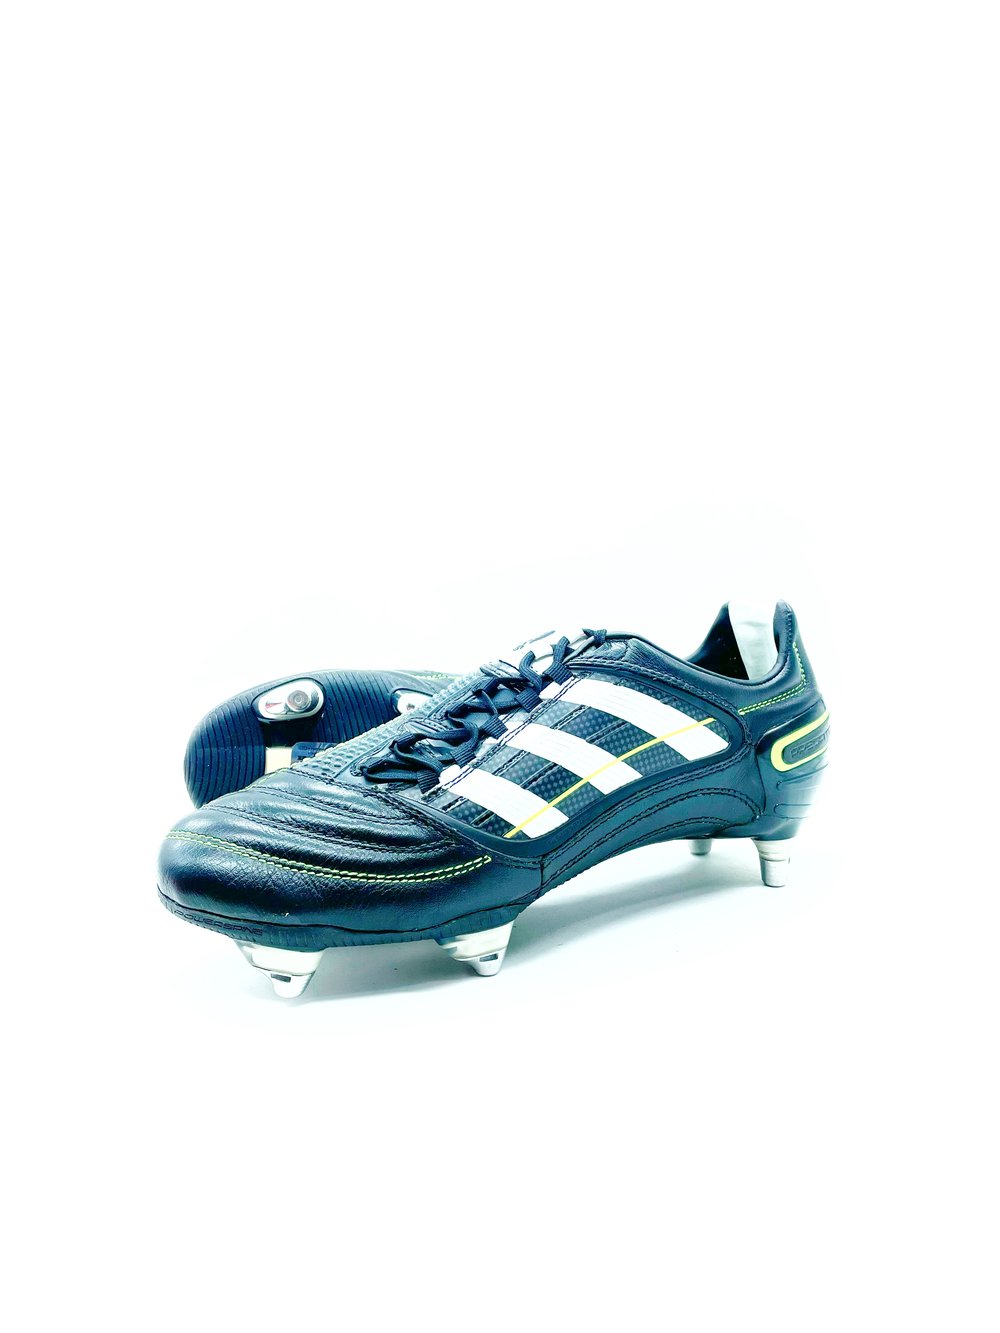 Tbtclassicfootballboots — Adidas X BLACK SG